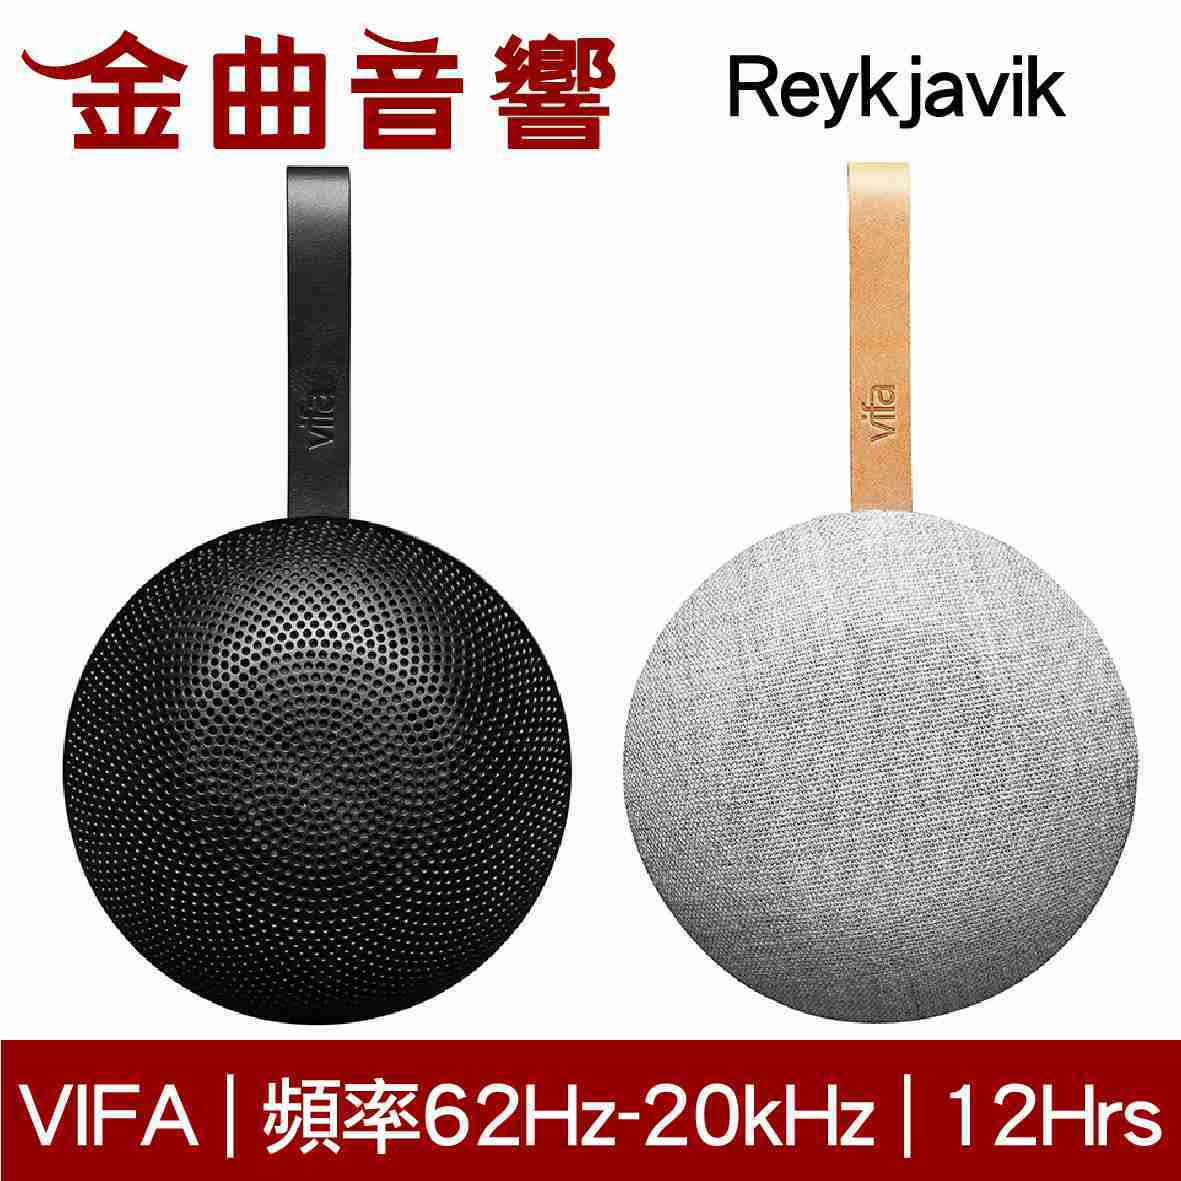 Vifa Reykjavik 雷克雅維克 兩色可選 無線 藍牙 隨身 喇叭 | 金曲音響